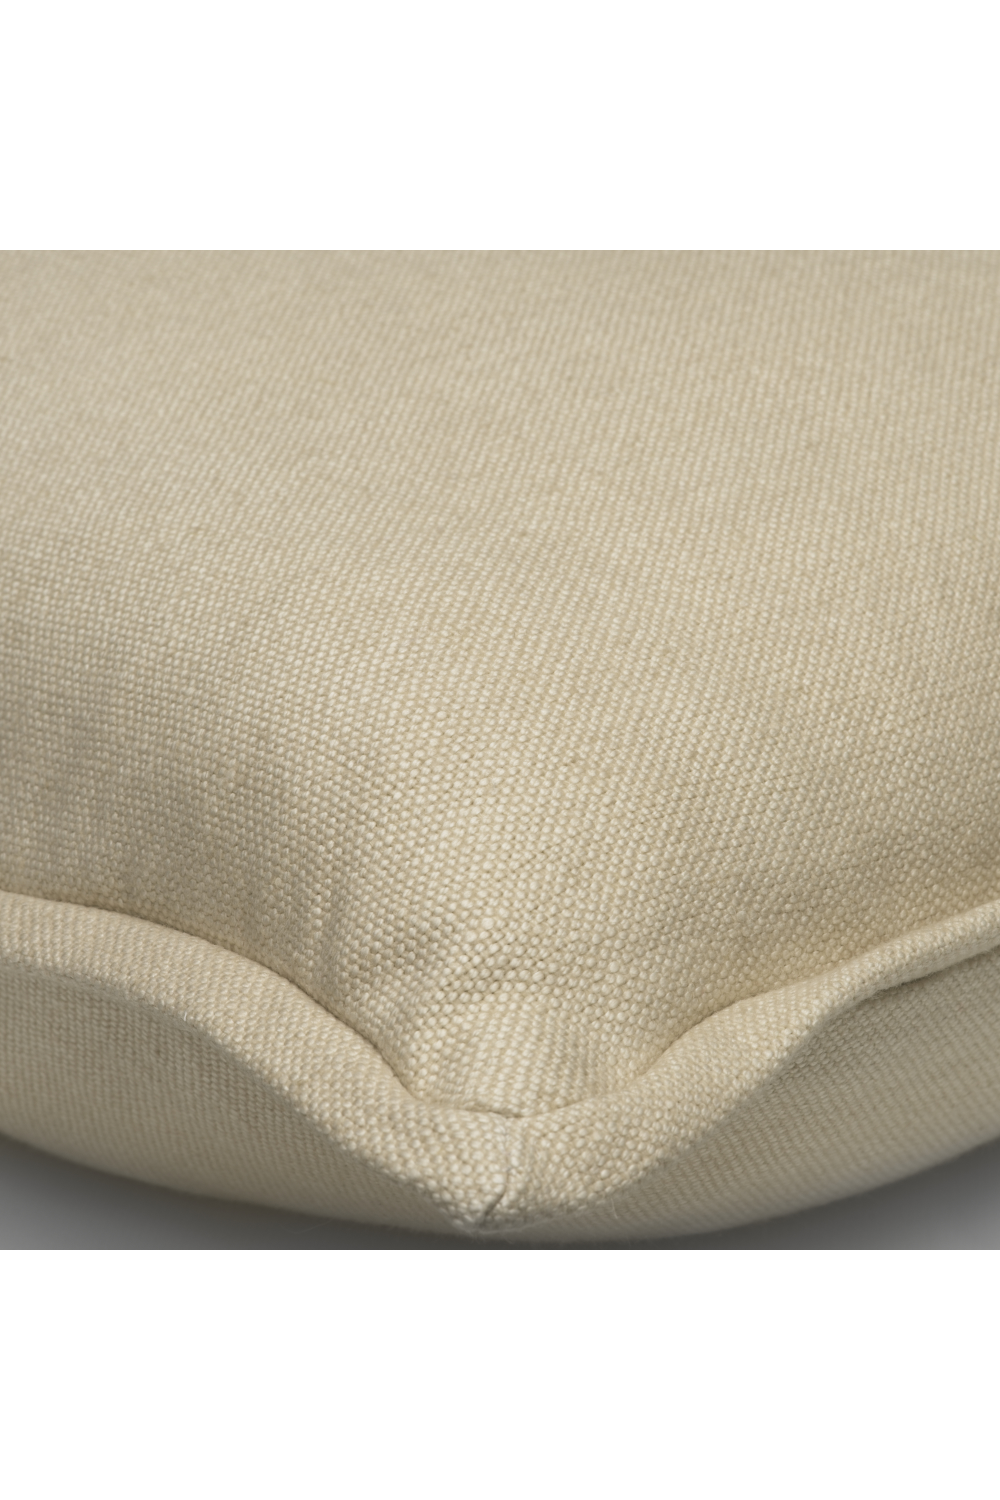 Linen Trimmed Cushion | Andrew Martin Rocco | Oroa.com